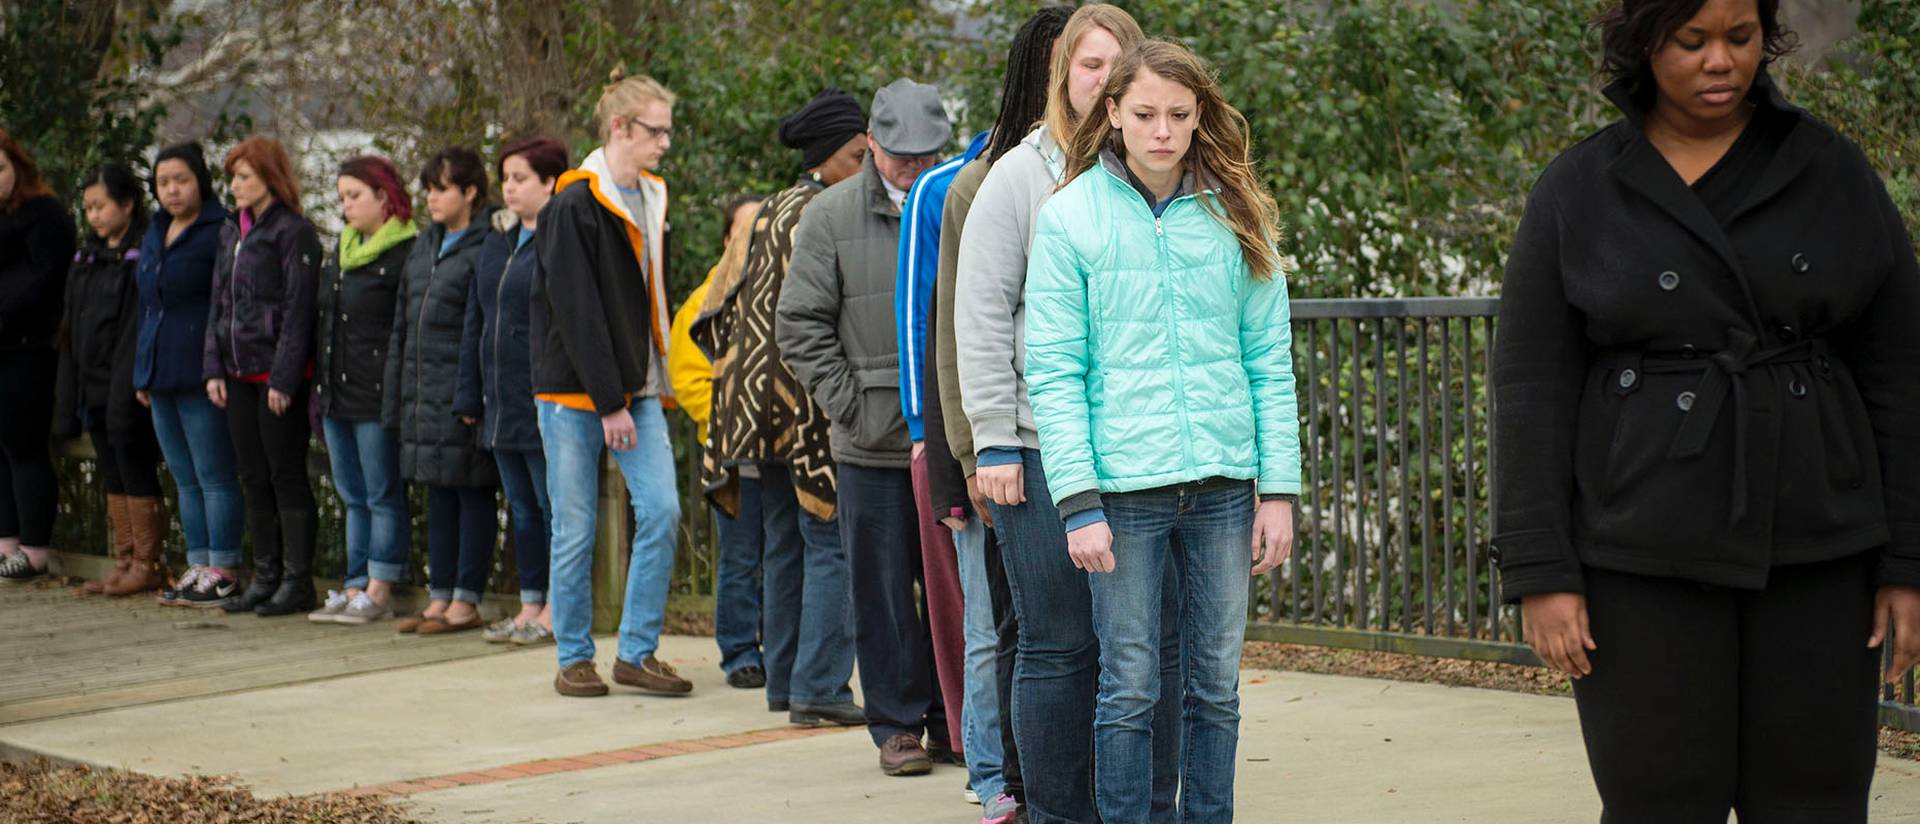 Students attend mock slavery reenactment in Selma, Alabama